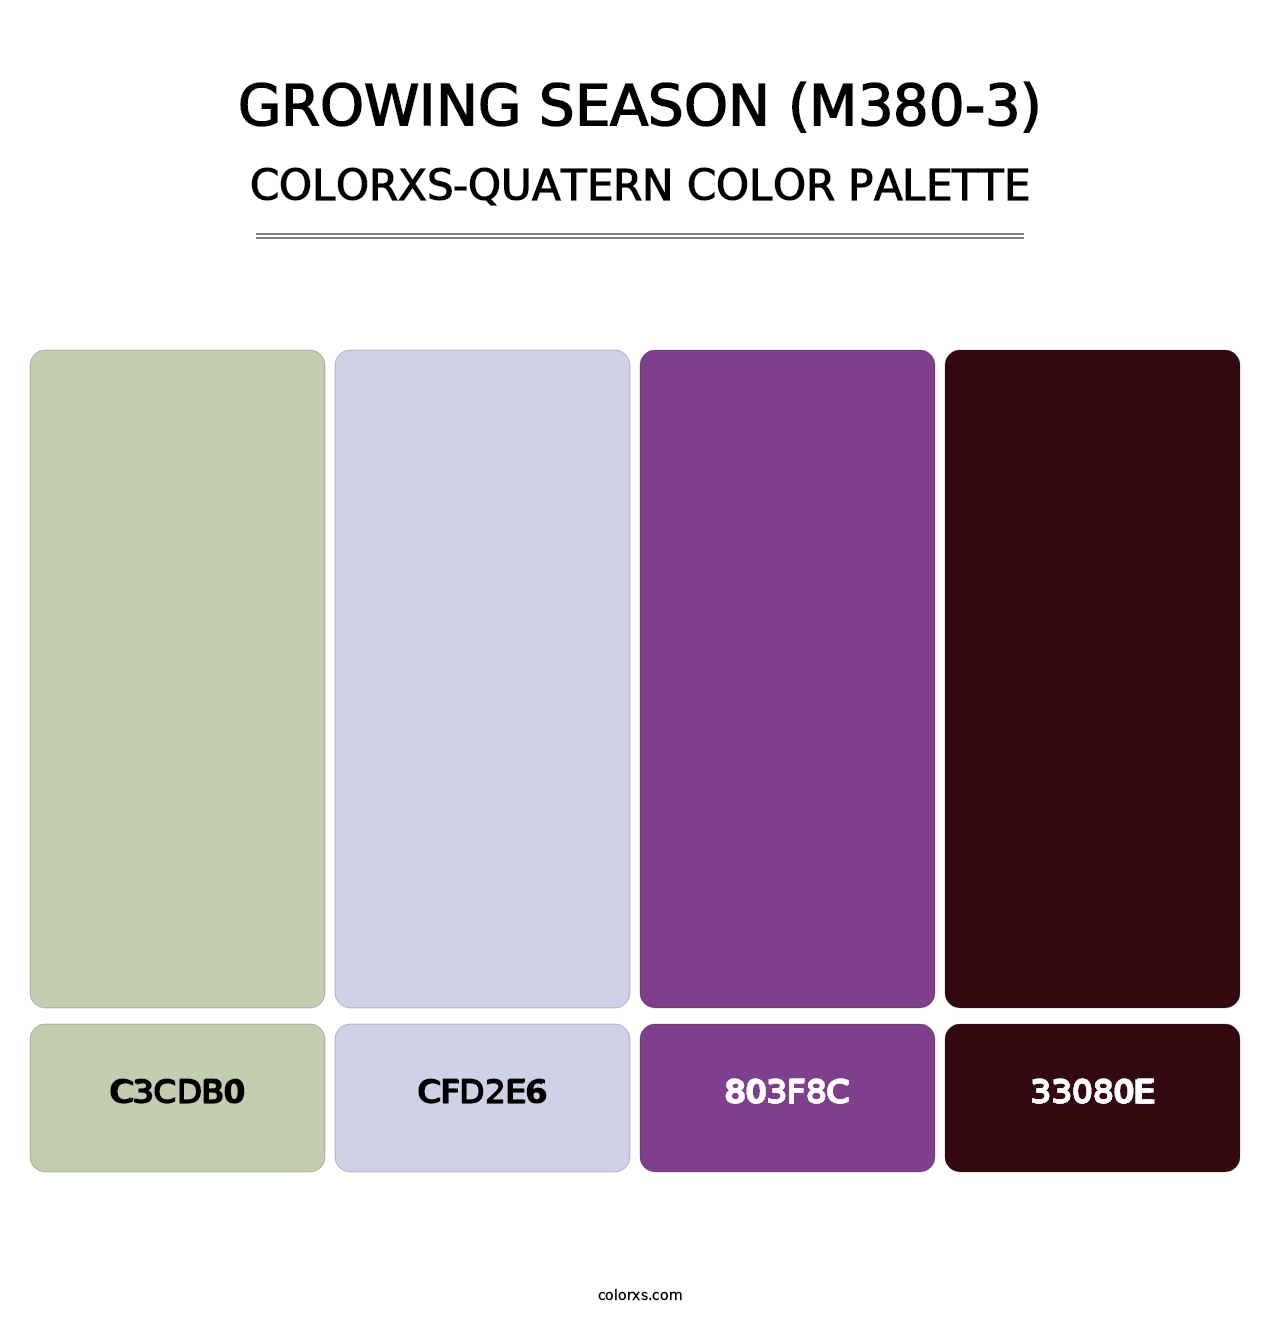 Growing Season (M380-3) - Colorxs Quatern Palette